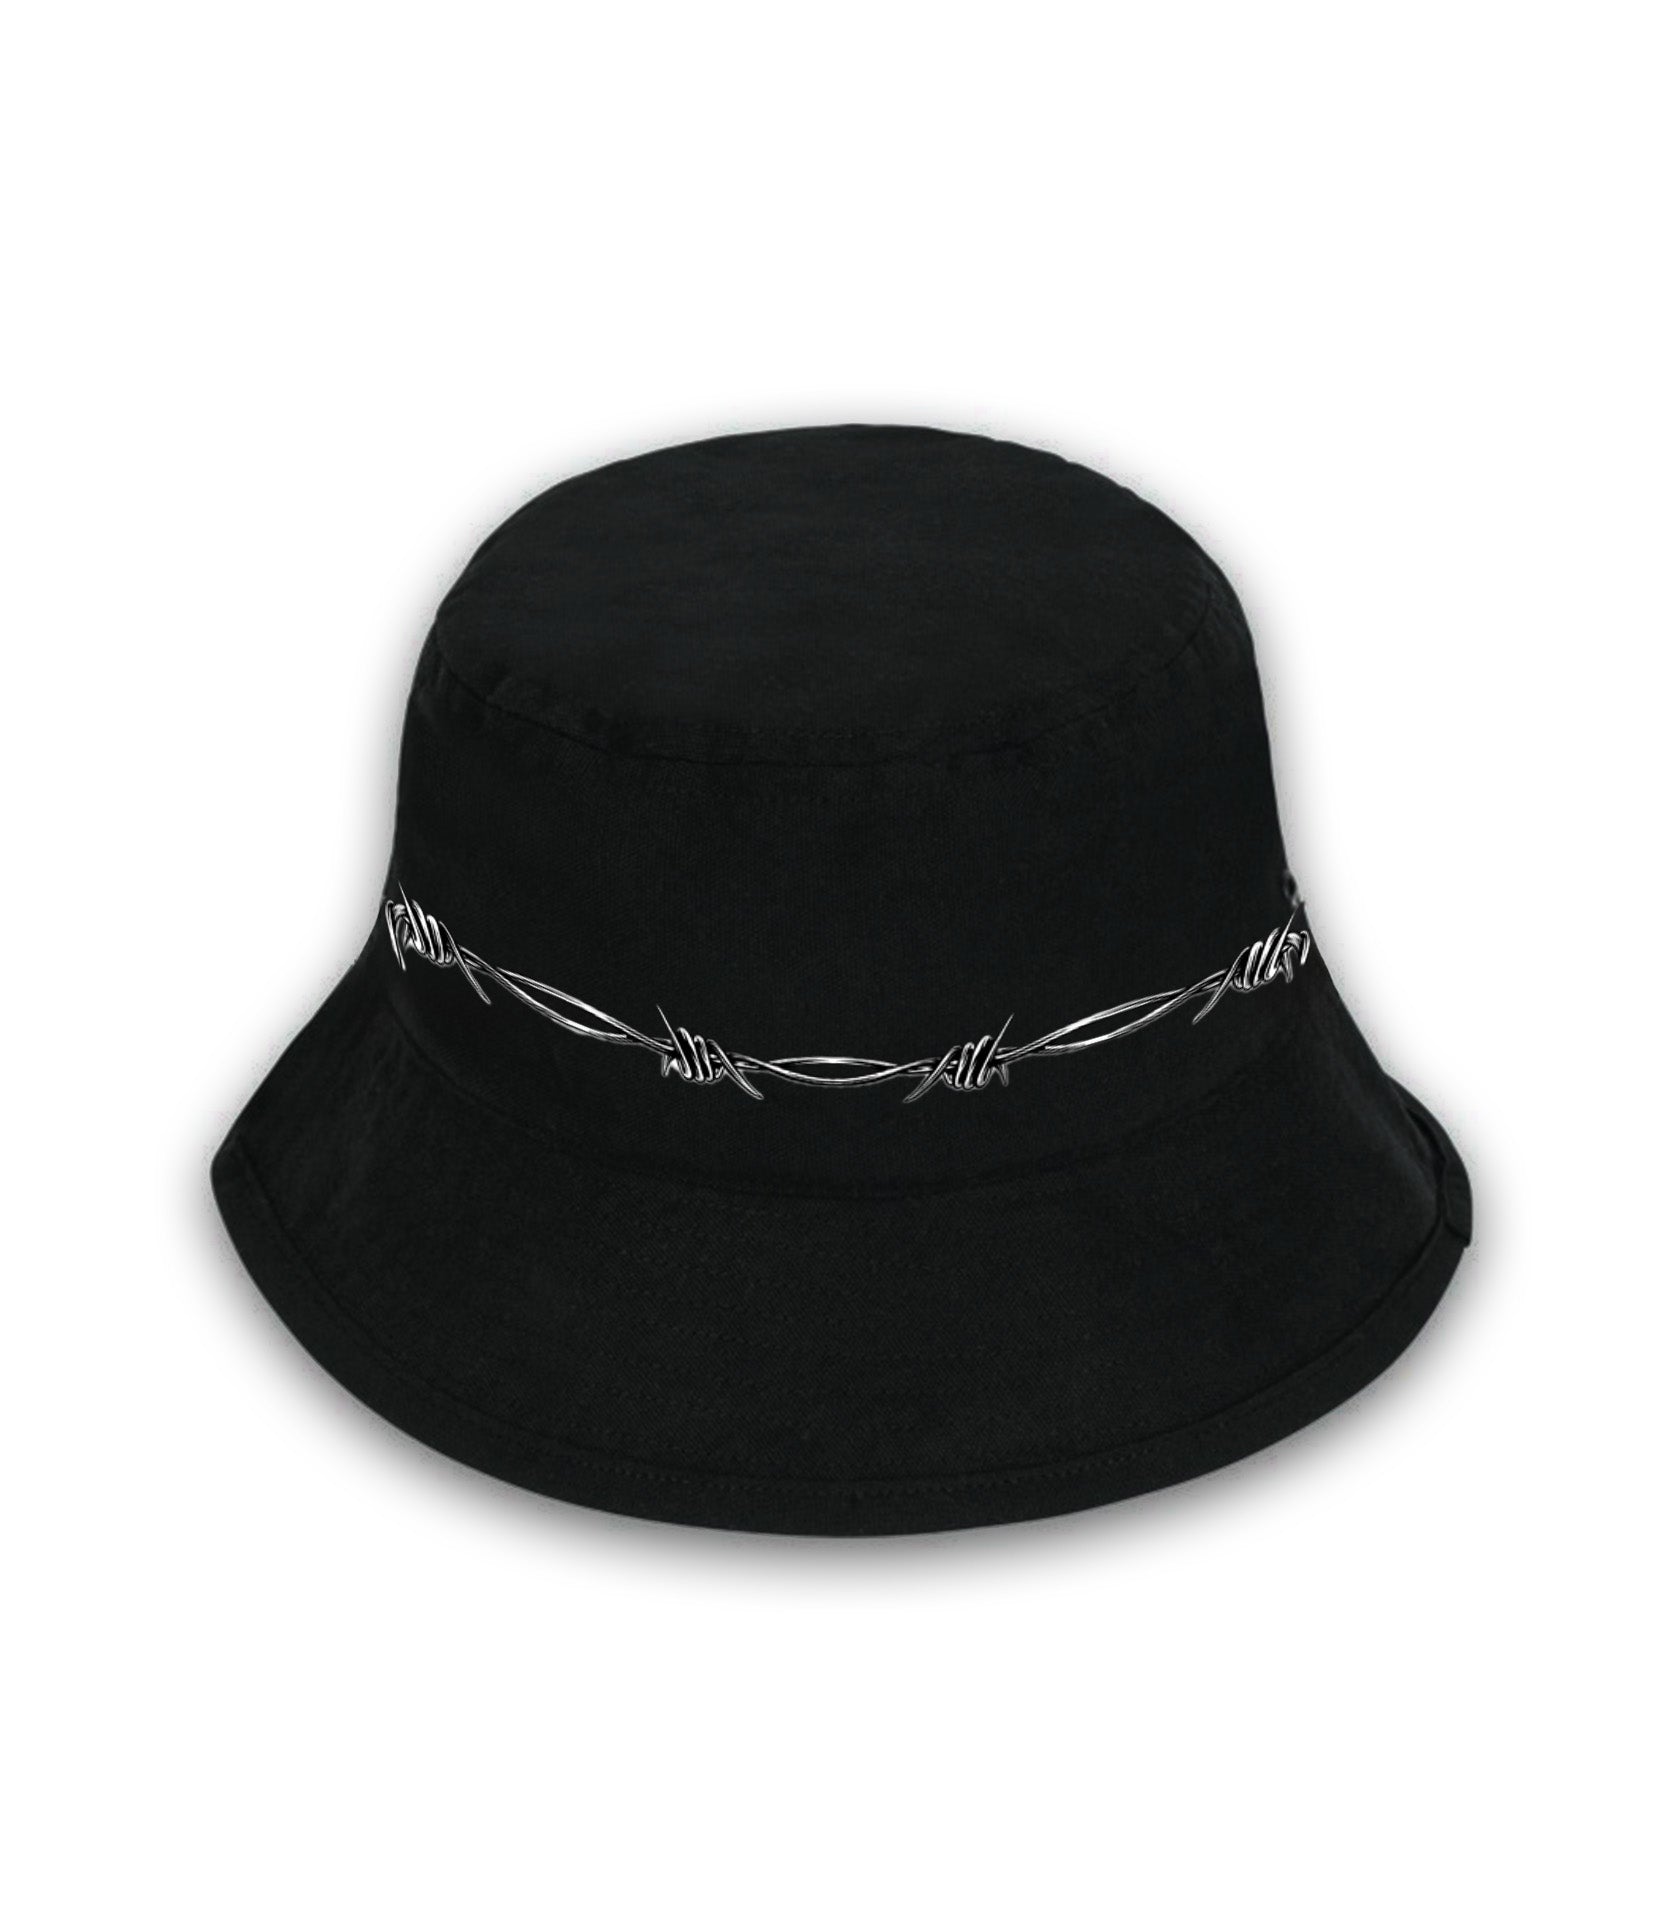 Bea collection x Bucket hat (black)